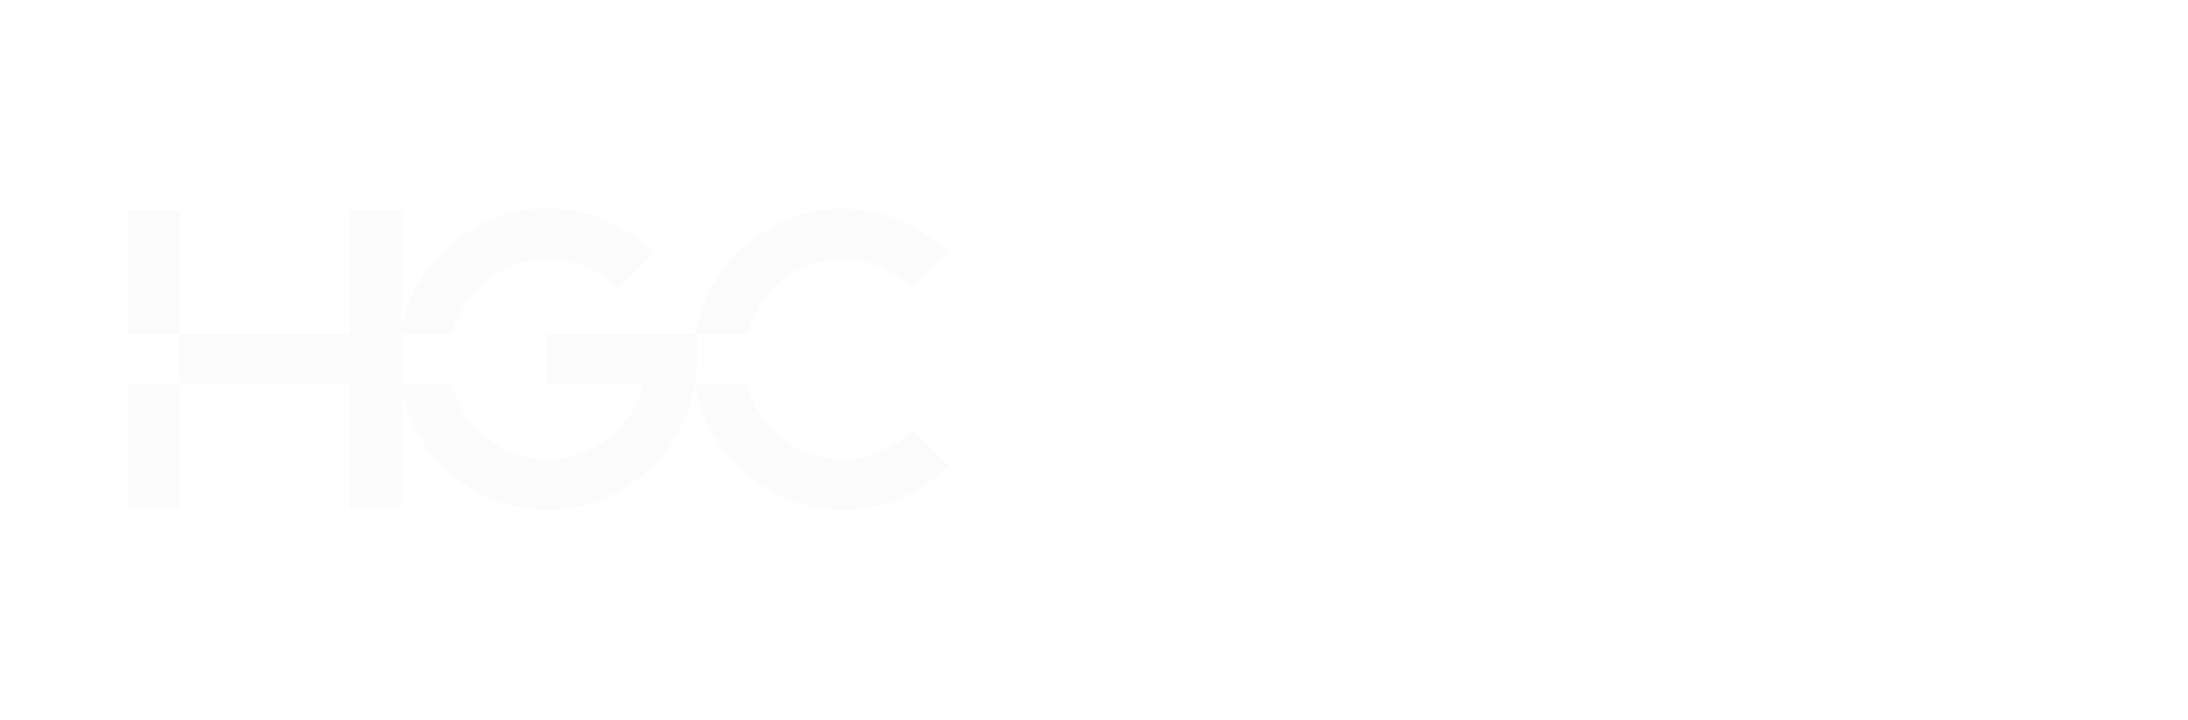 Hgc global communications company logo on a black background.